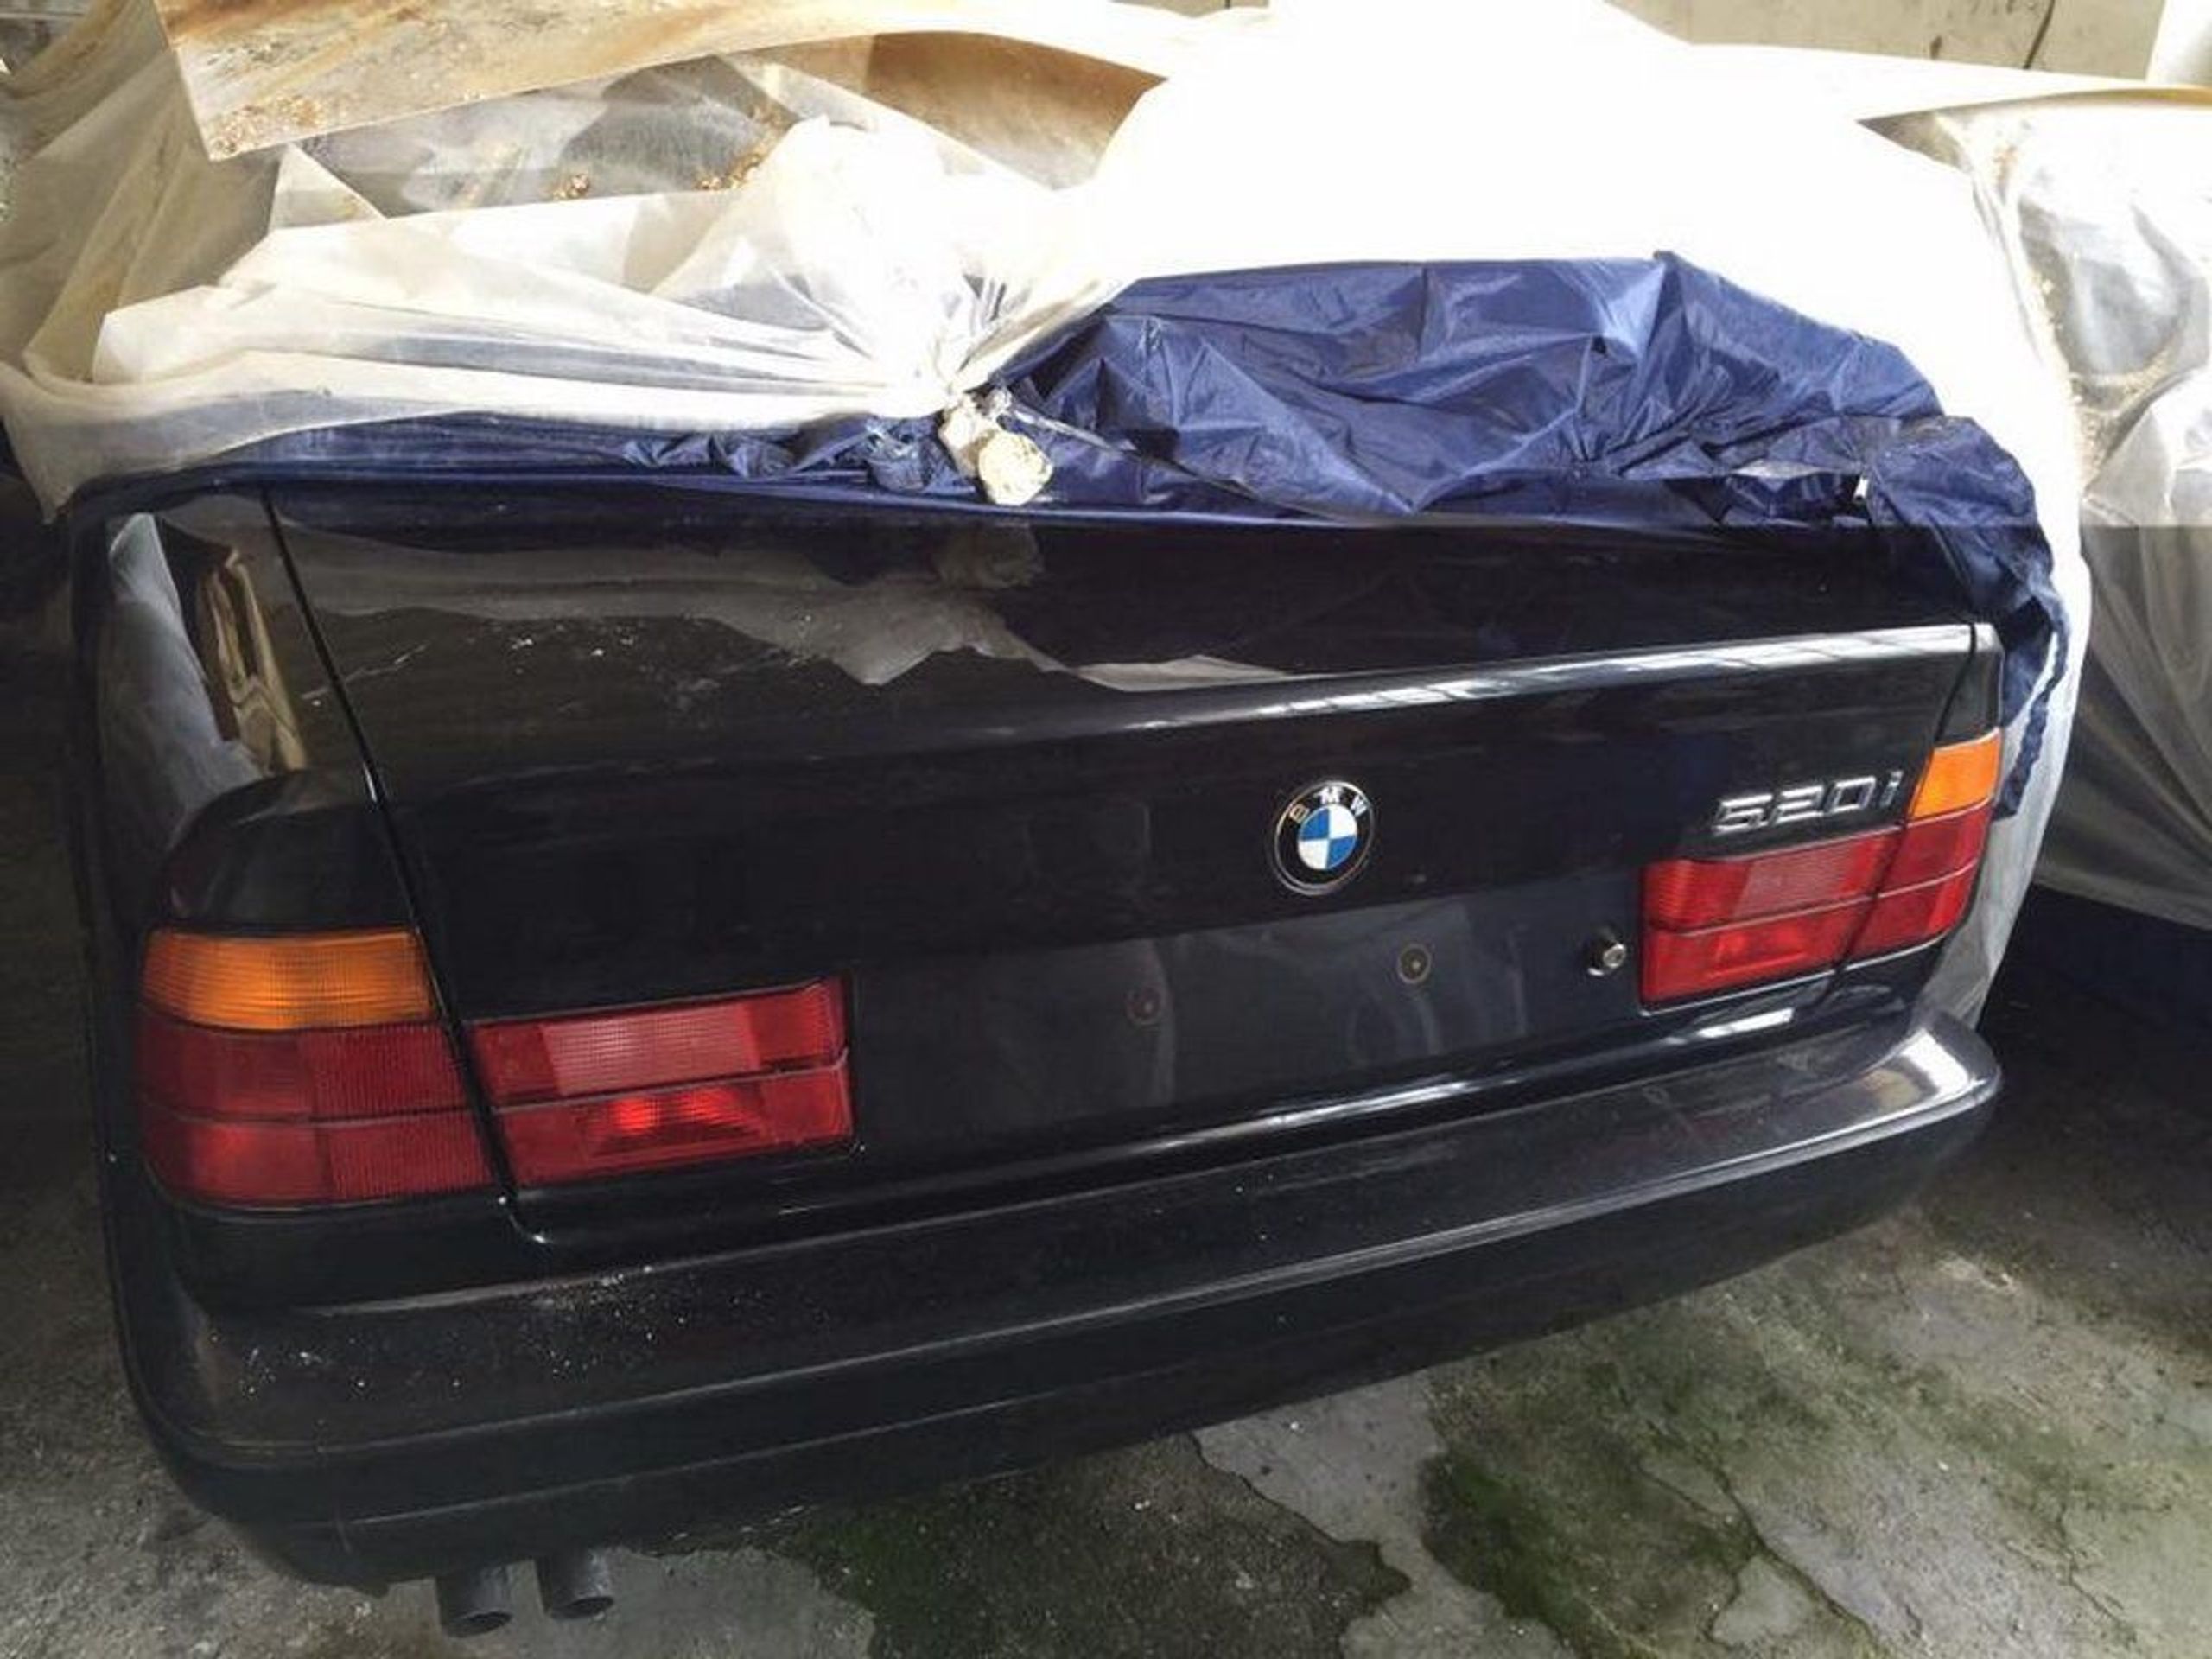 Sklad 25 let ukrýval 11 vozů BMW řady 5 - 32 - Fotogalerie: V bulharském skladu se 25 let skrýval poklad (5/16)